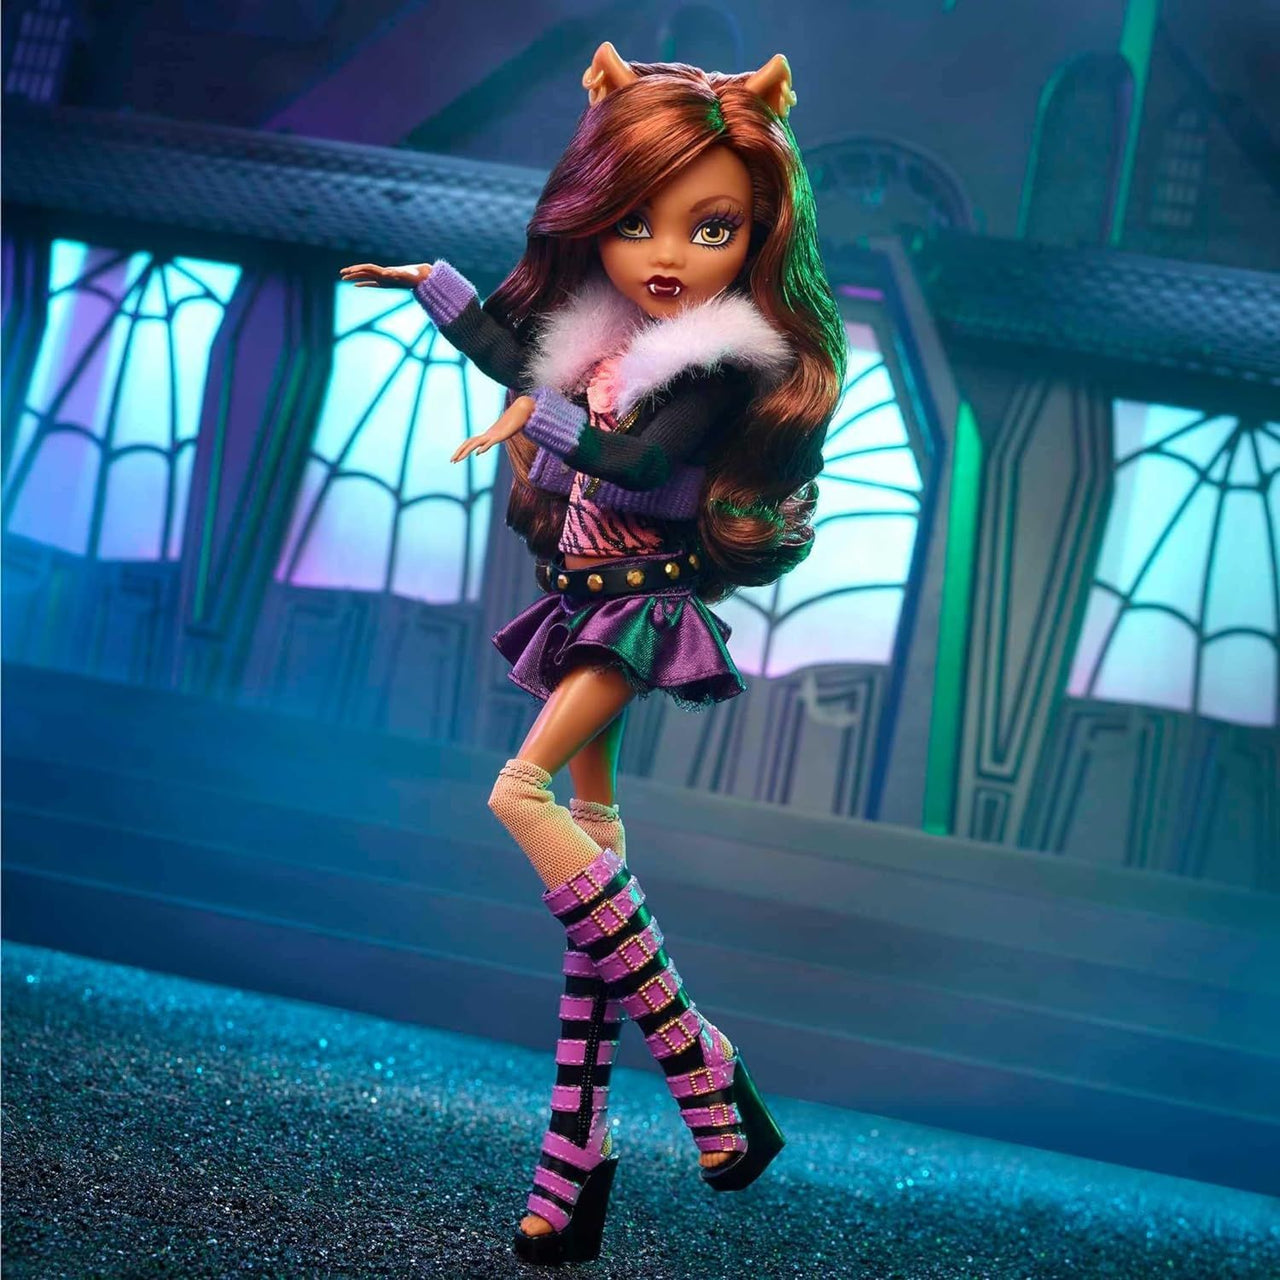 Monster High Boo-riginal Creeproduction Clawdeen Wolf Doll Monster High